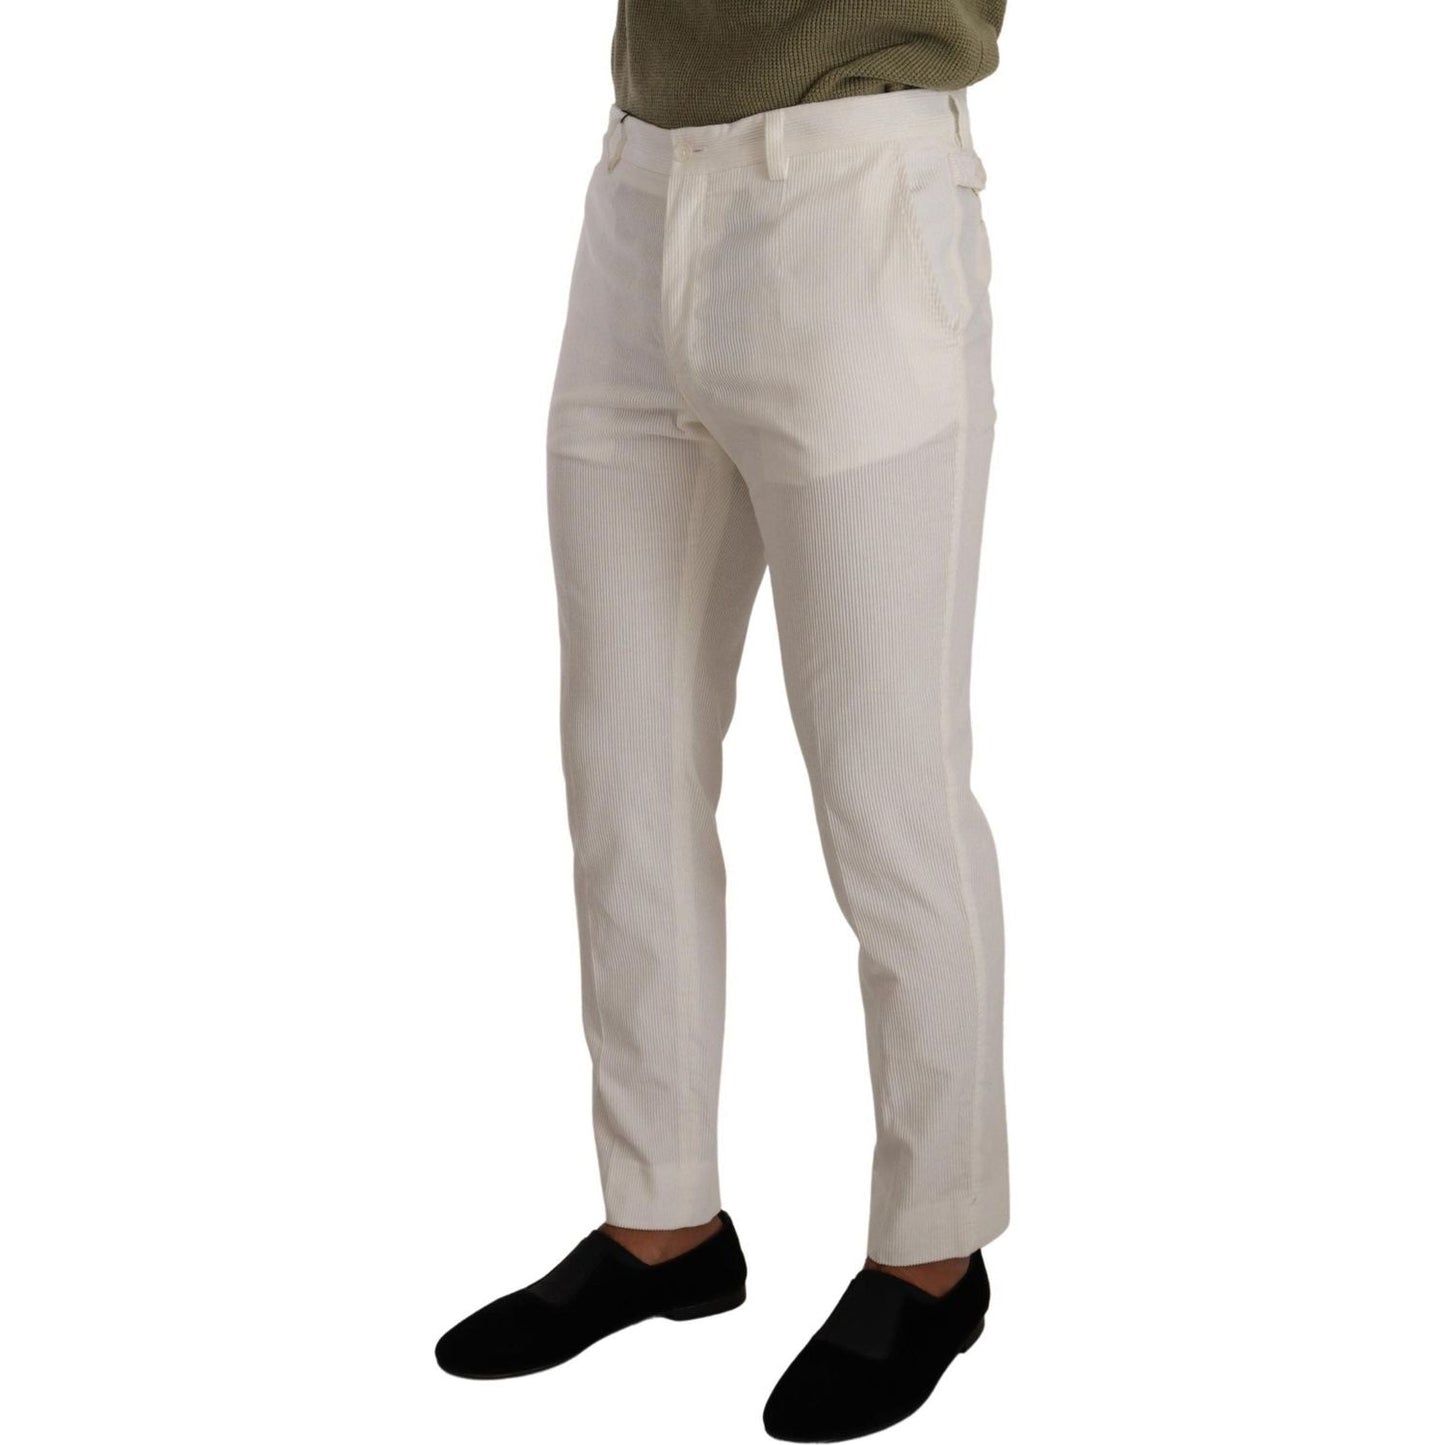 Dolce & Gabbana Elegant Slim Fit Cotton Trousers white-cotton-skinny-corduroy-trouser-pants